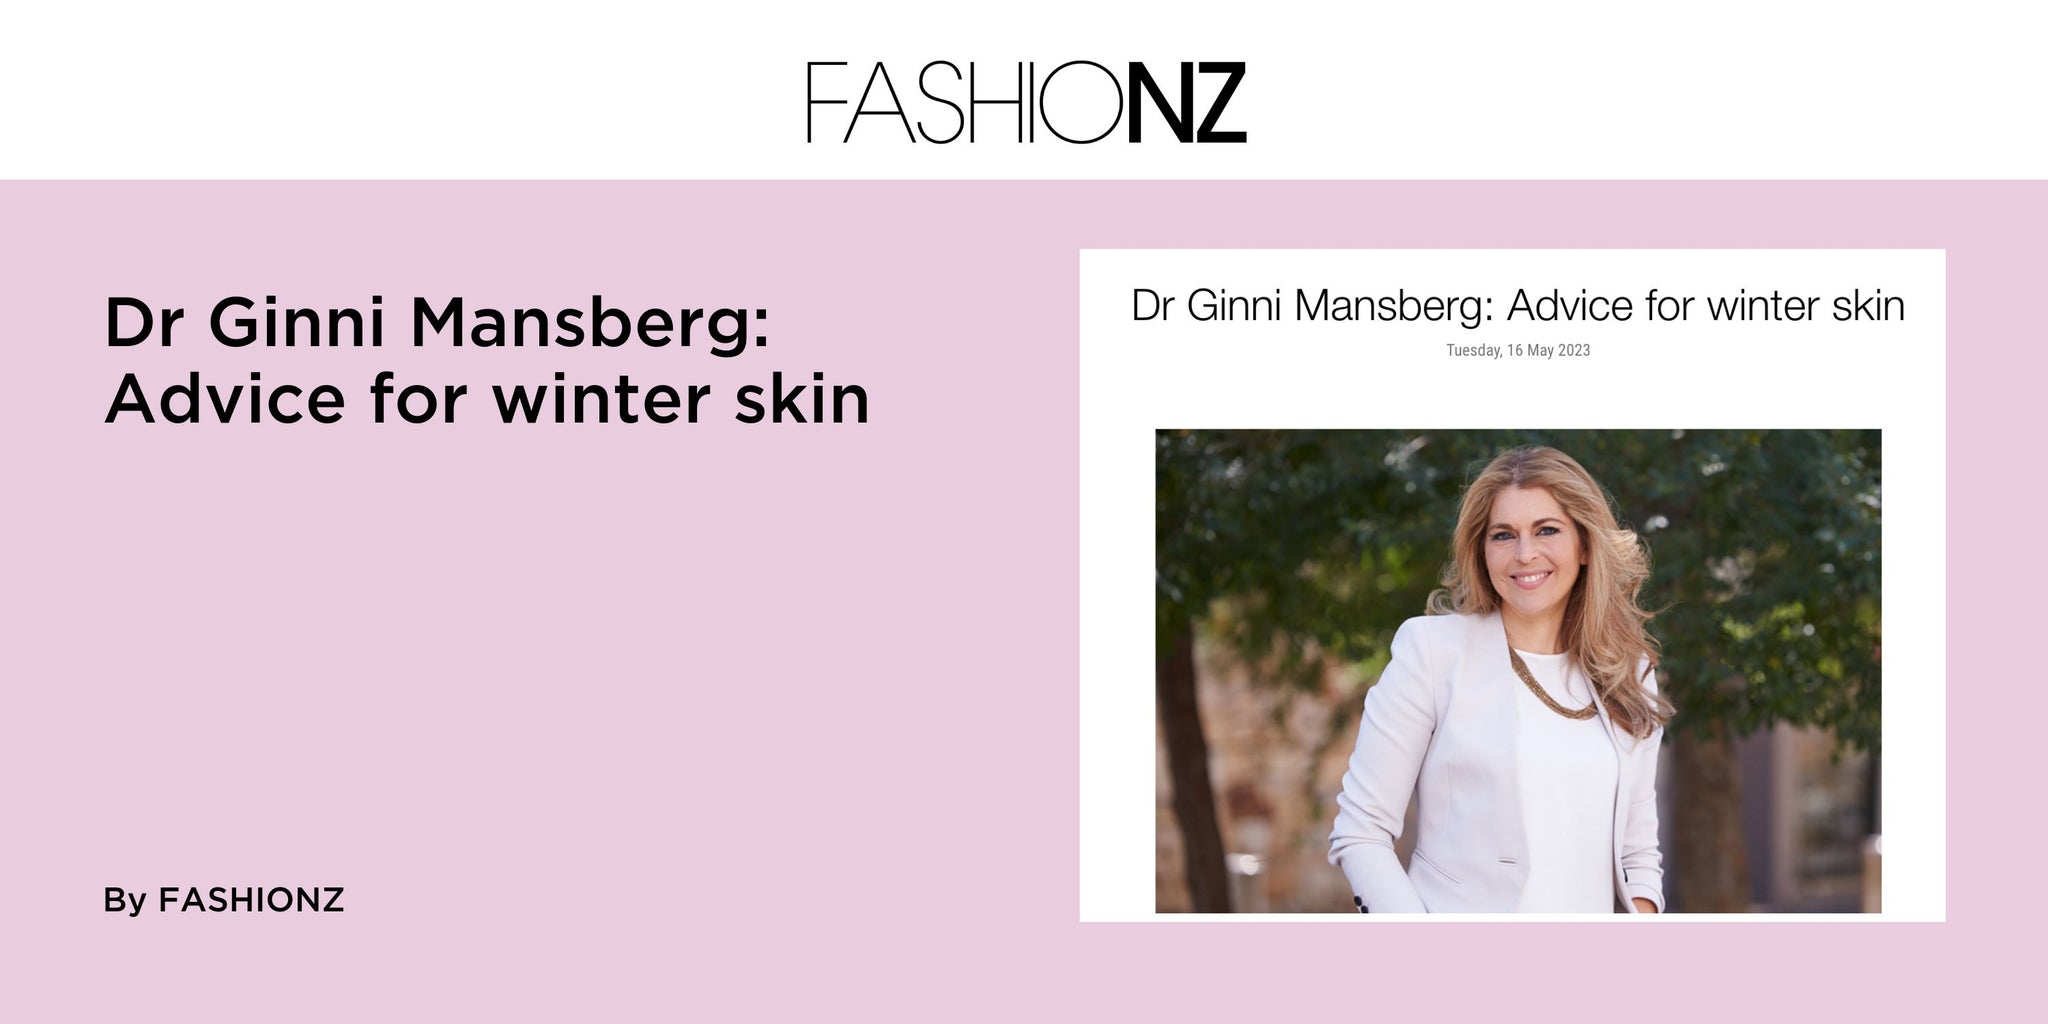 Dr. Ginni Mansberg: Advice for winter skin